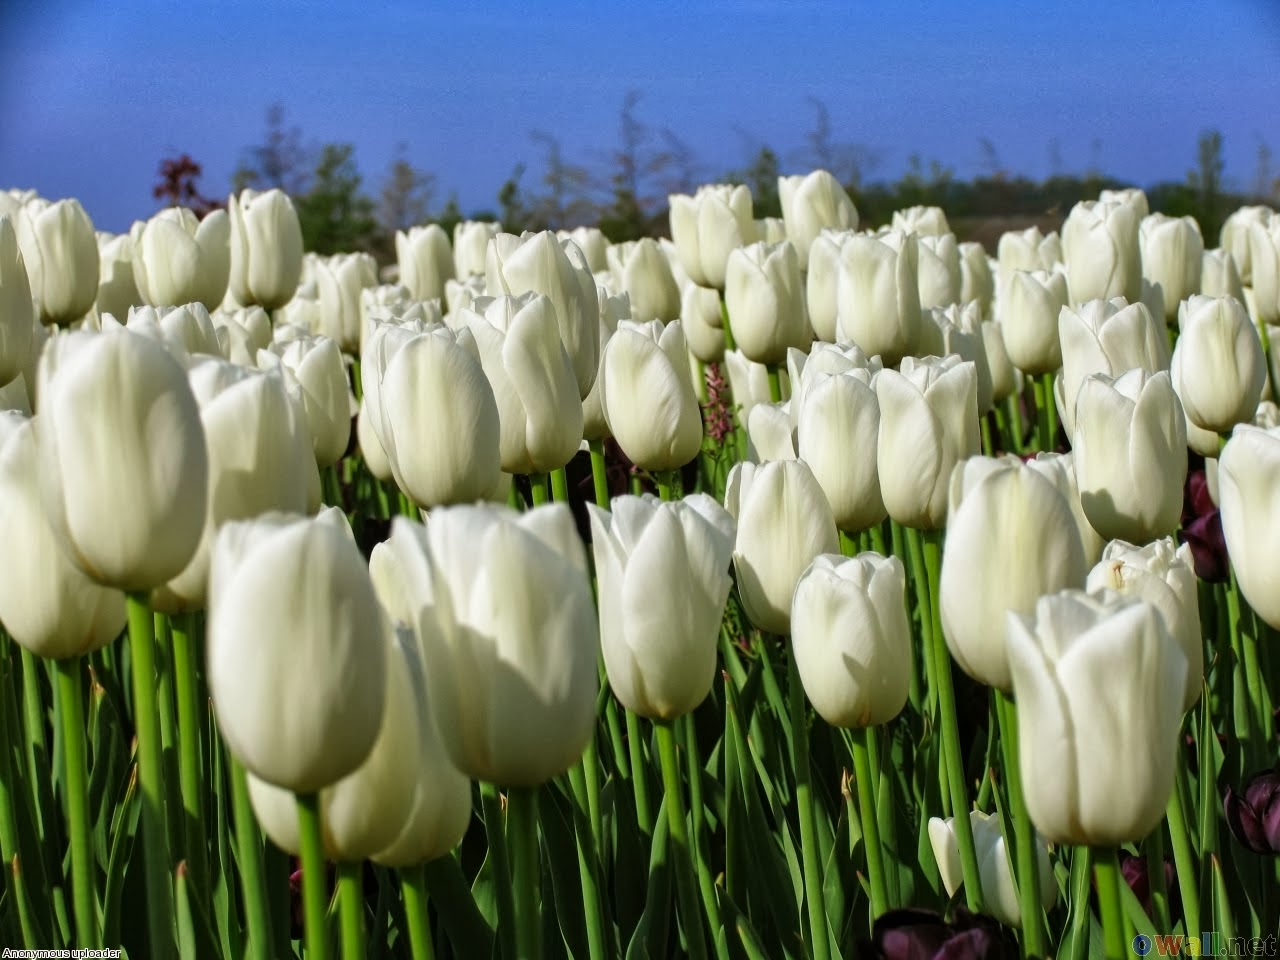 an Opportunity Lovely: Arti Dibalik Warna Bunga Tulip